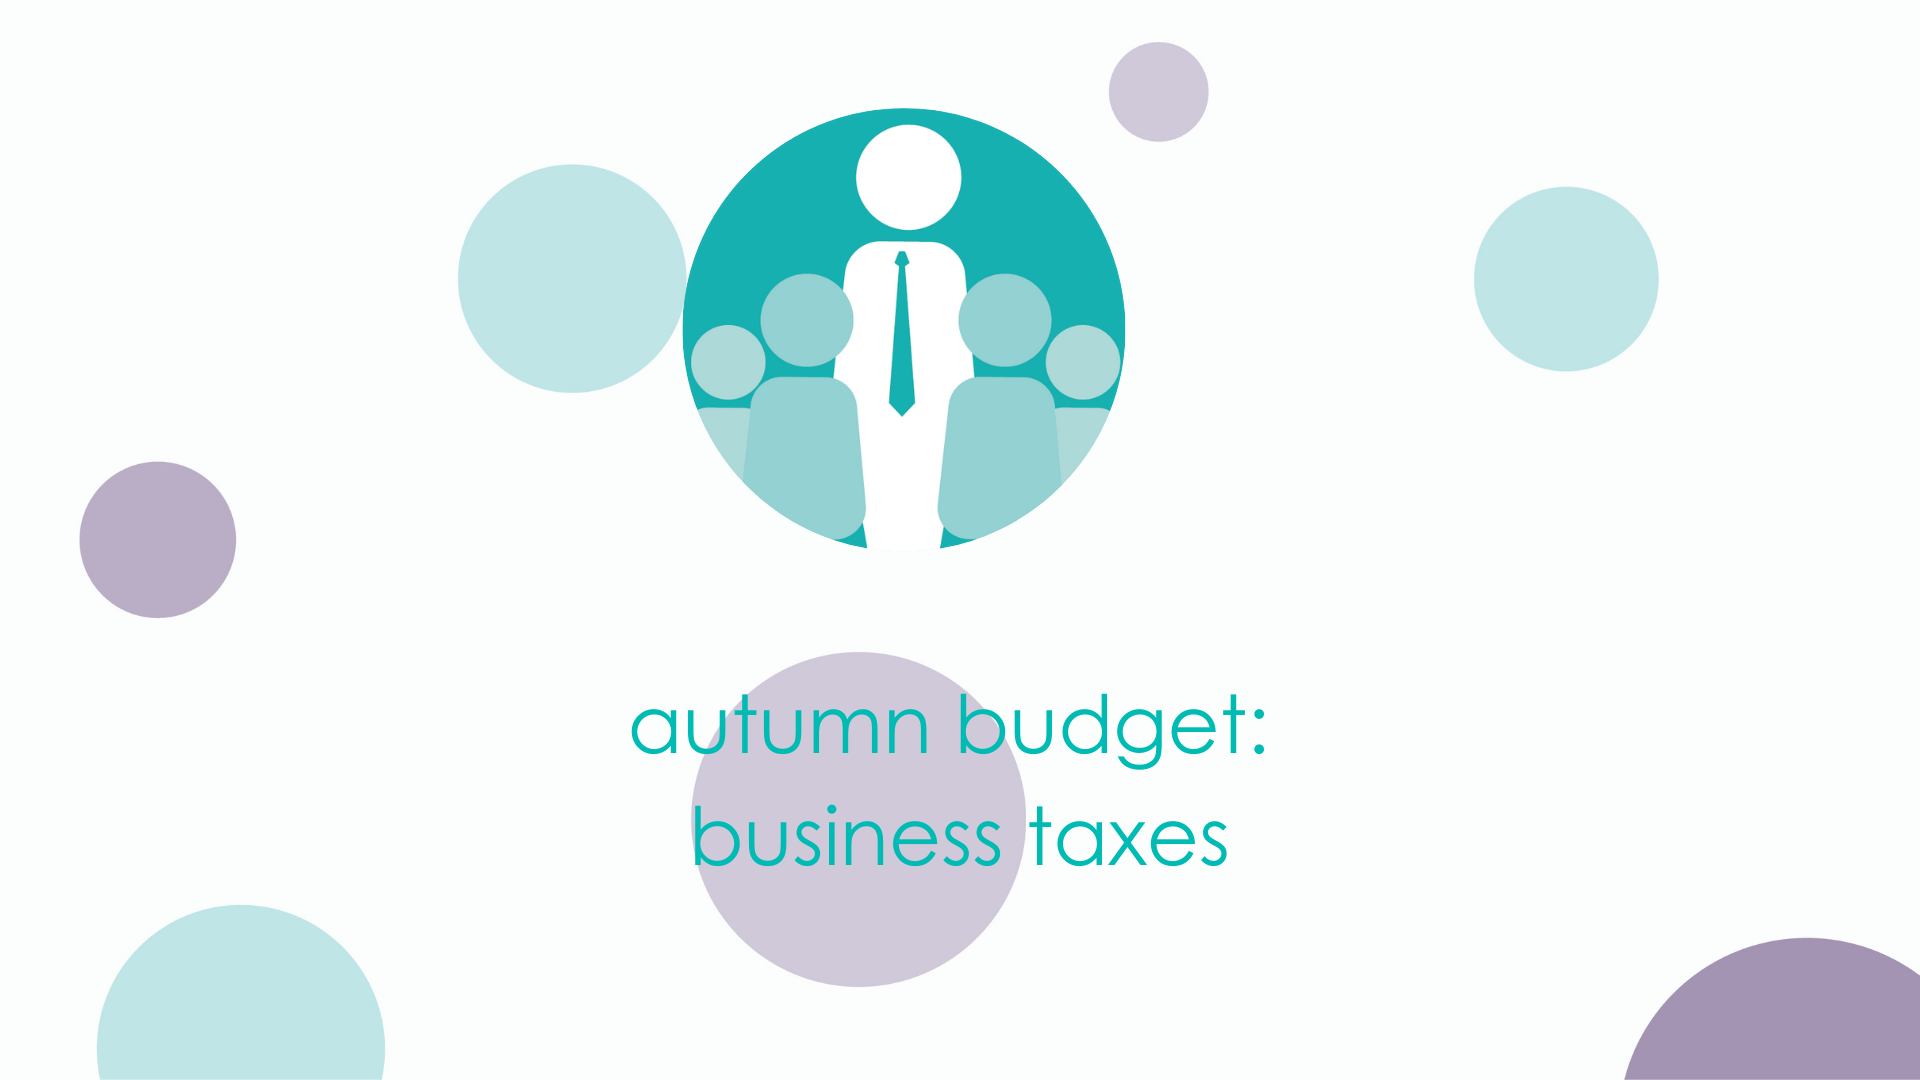 Autumn budget: business taxes